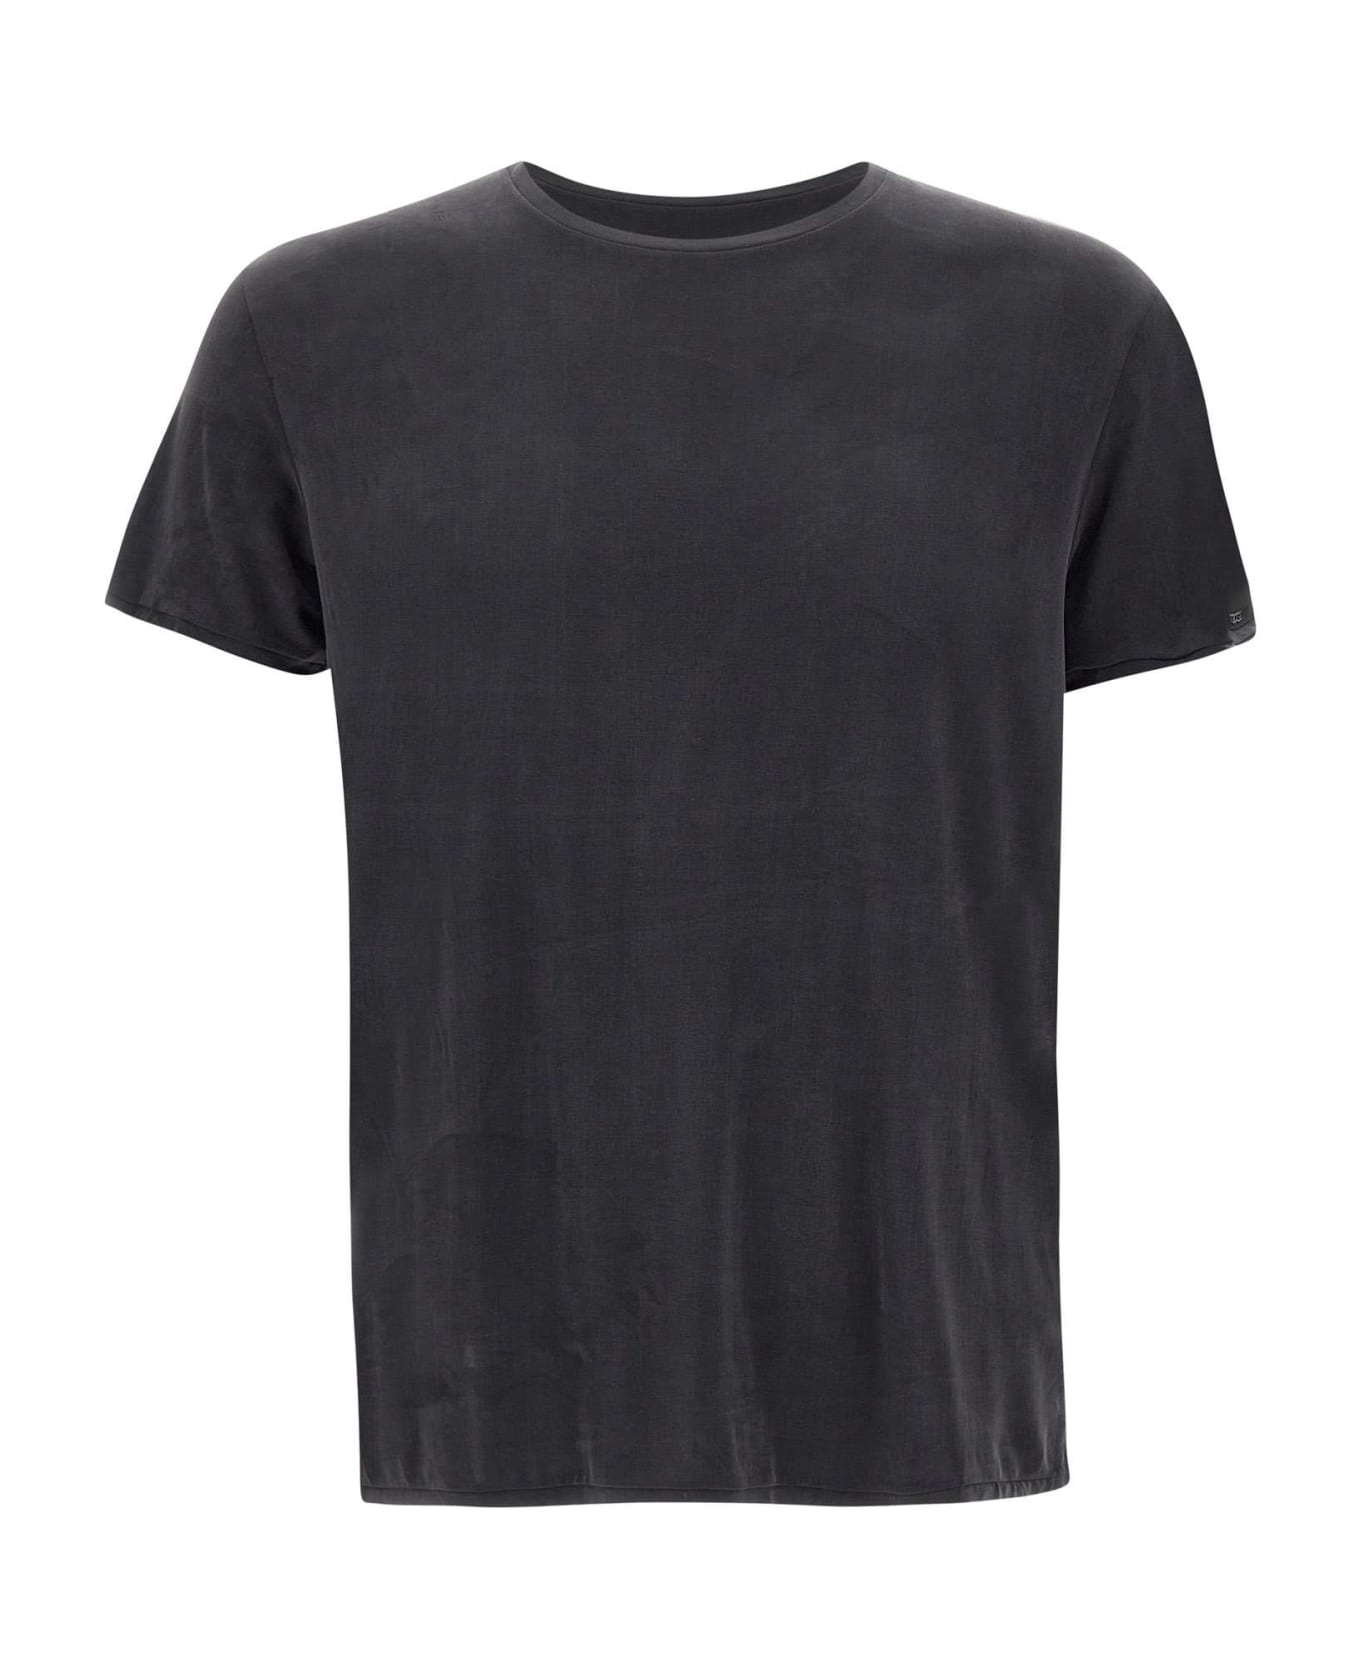 RRD - Roberto Ricci Design 'cupro Shirty' T-shirt - Black シャツ